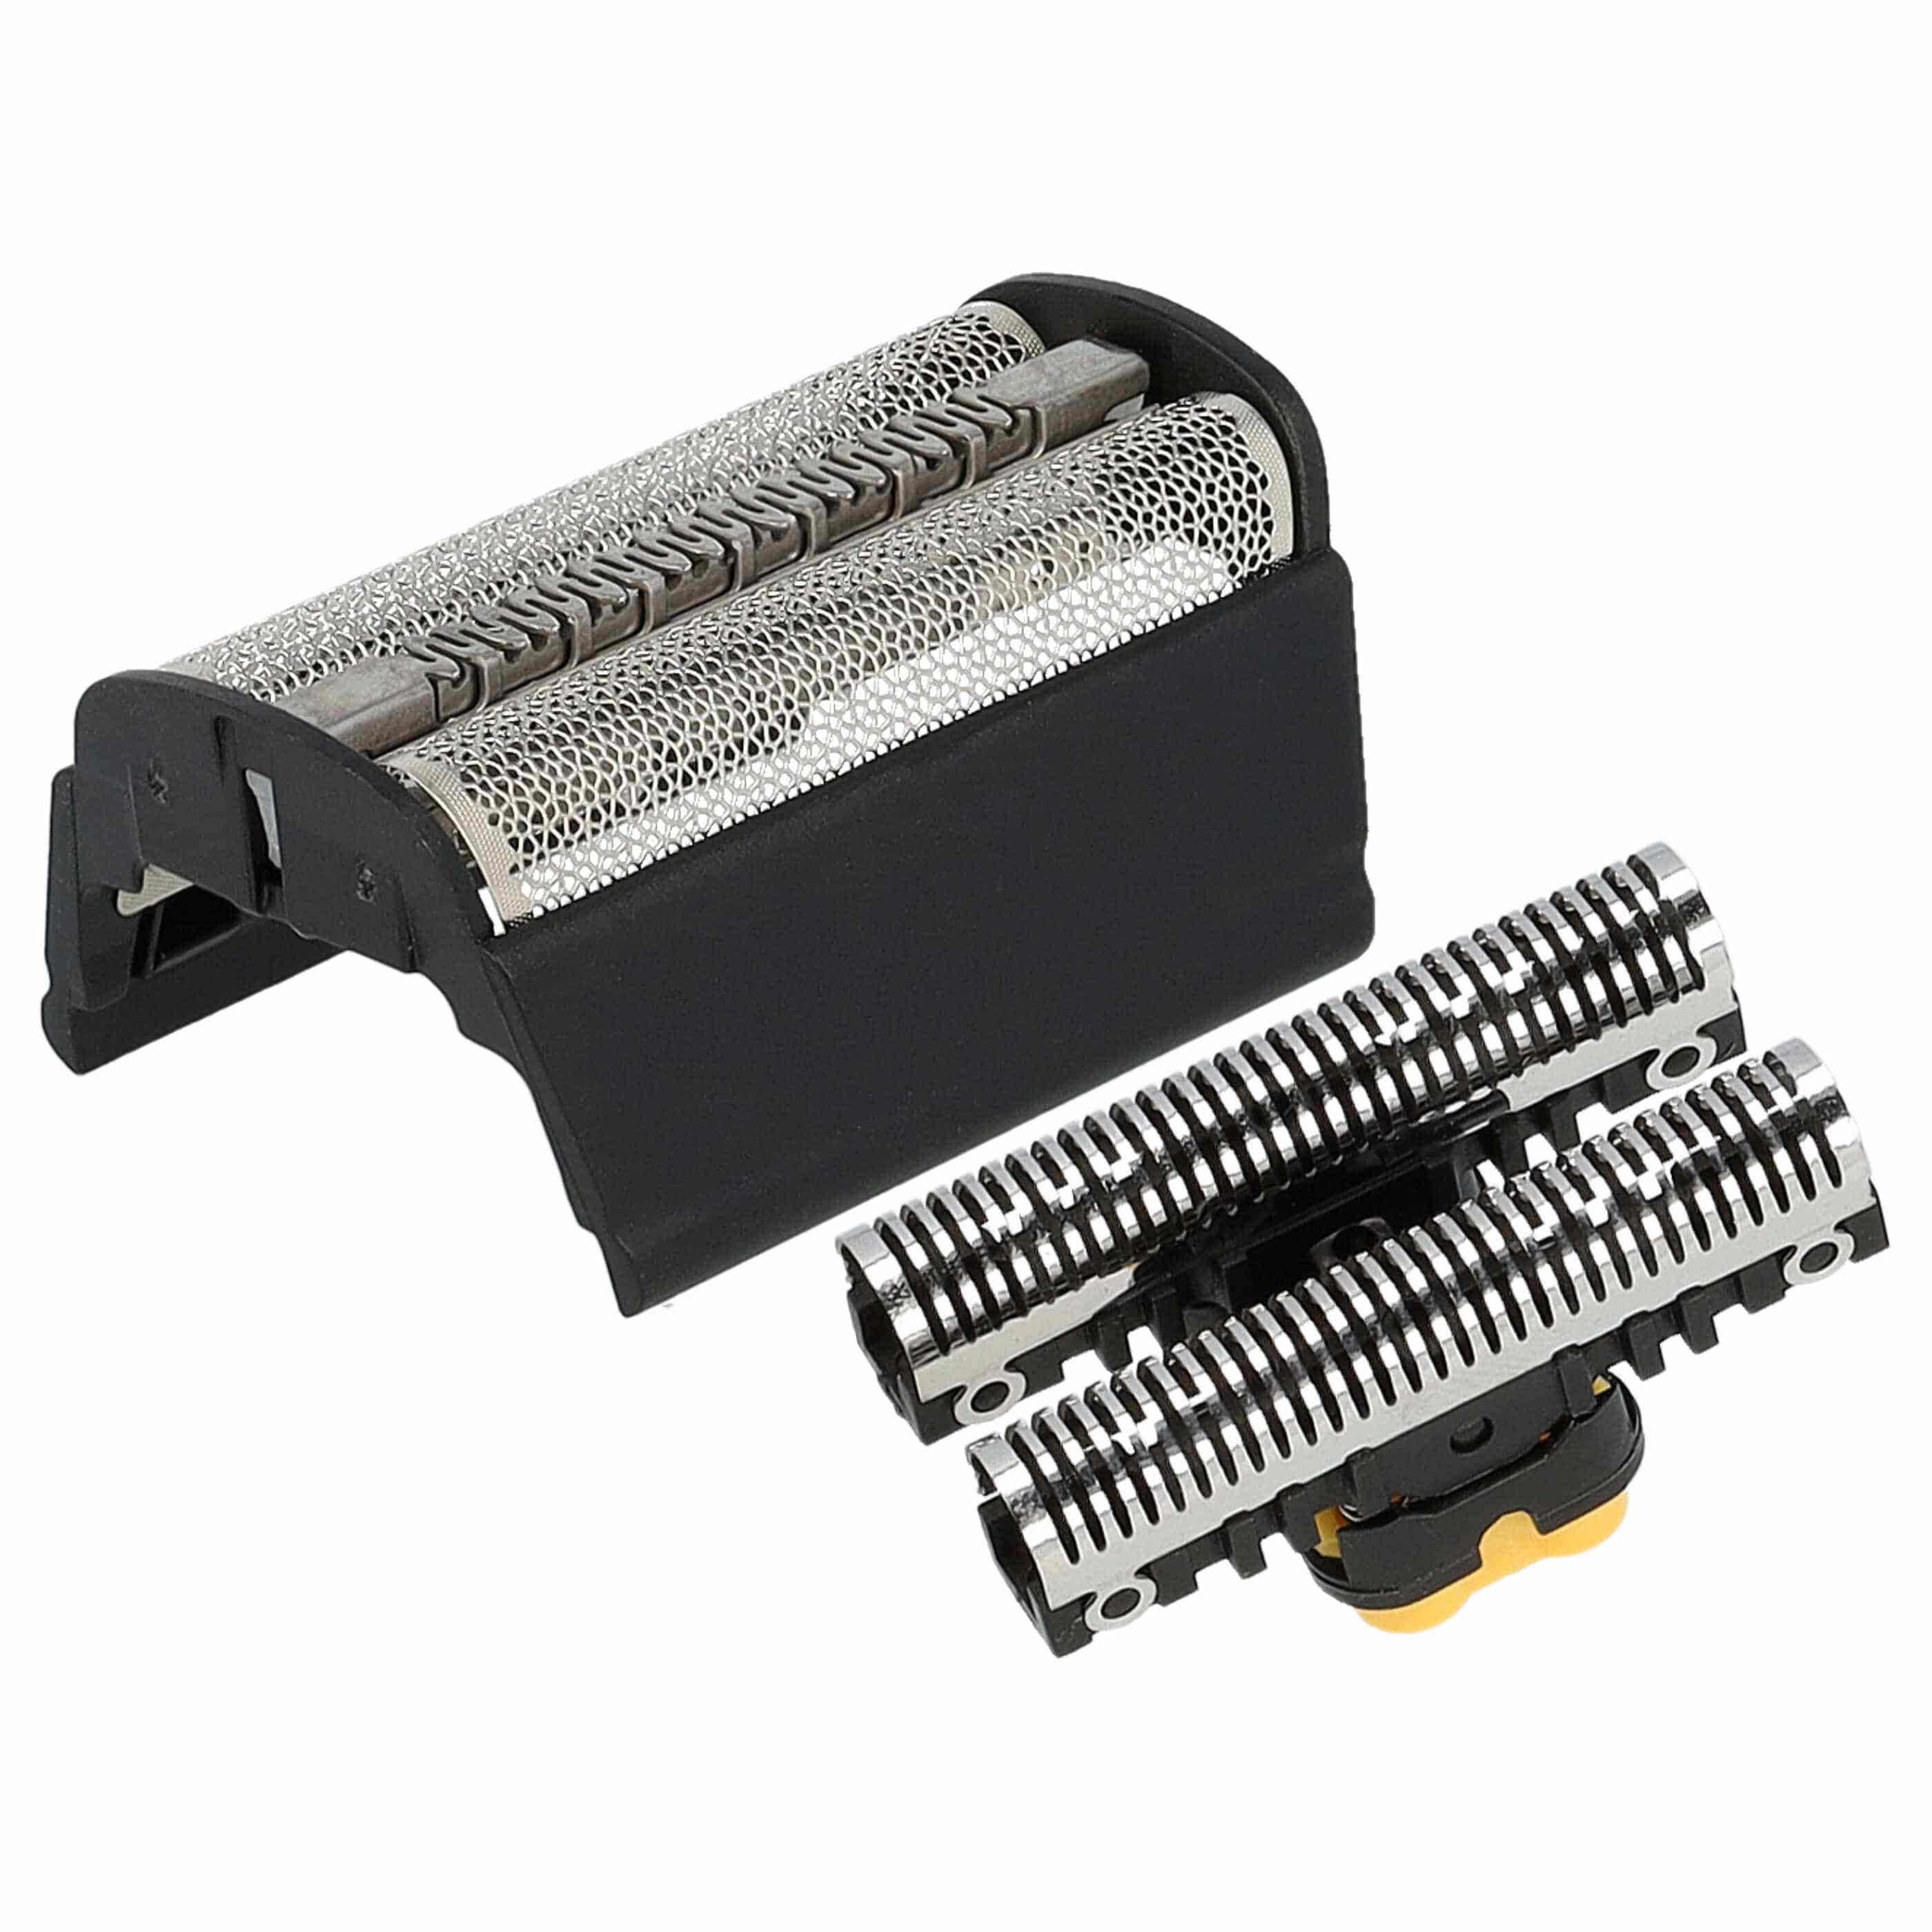 Dual Shaving Foil + Frame Cutter Block Set as Replacement for Braun 31B for Braun Razors - Shaving Parts Set